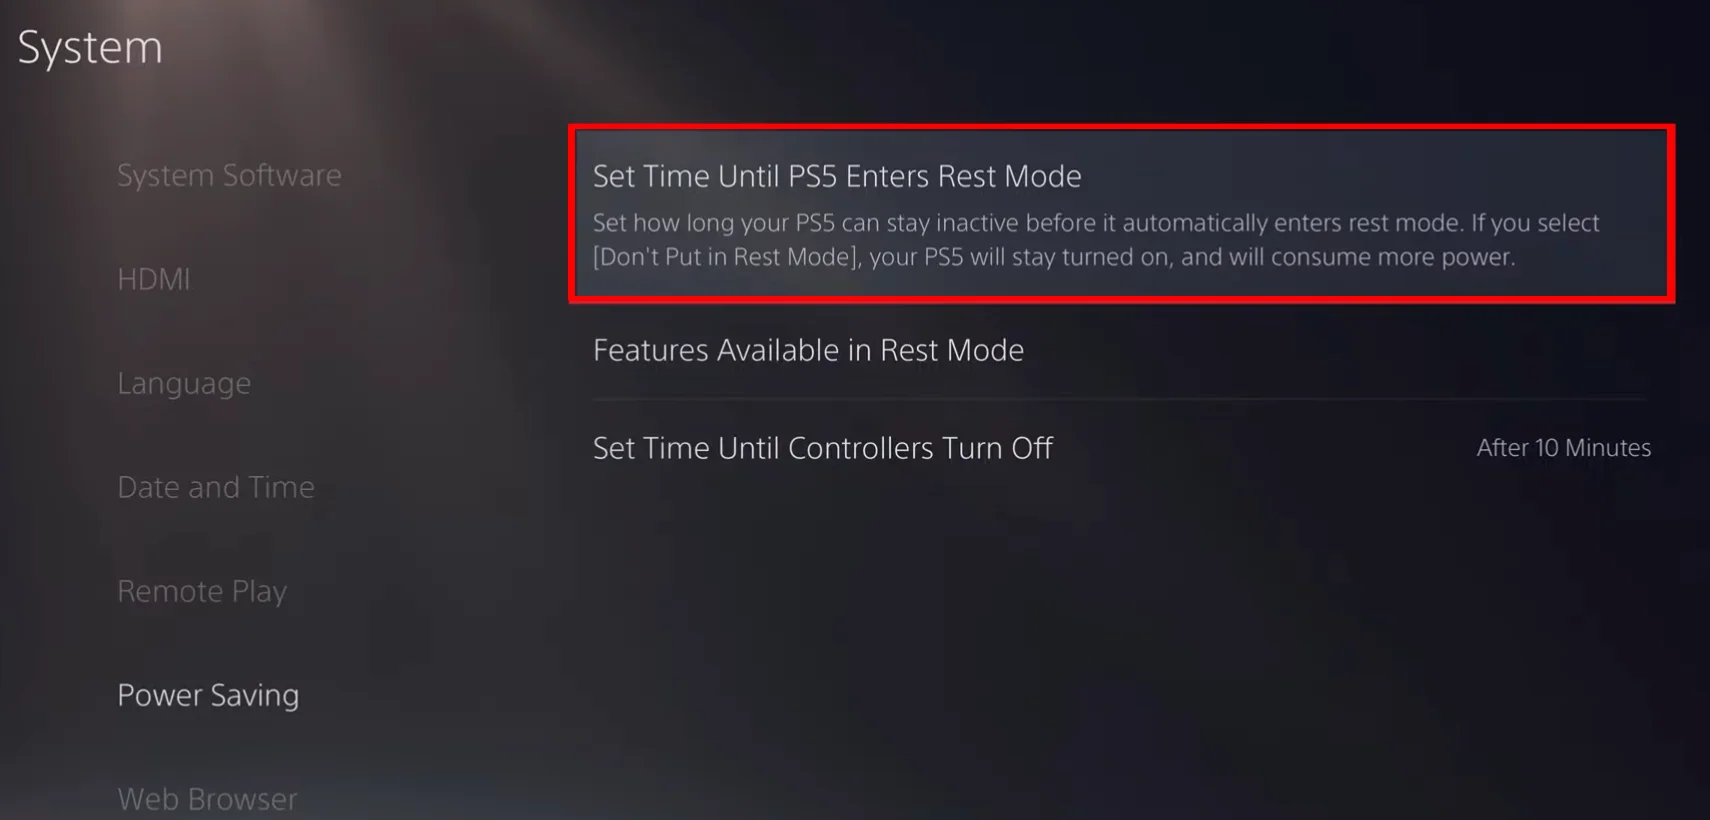 Set Time Until PS5 Enters Rest Mode